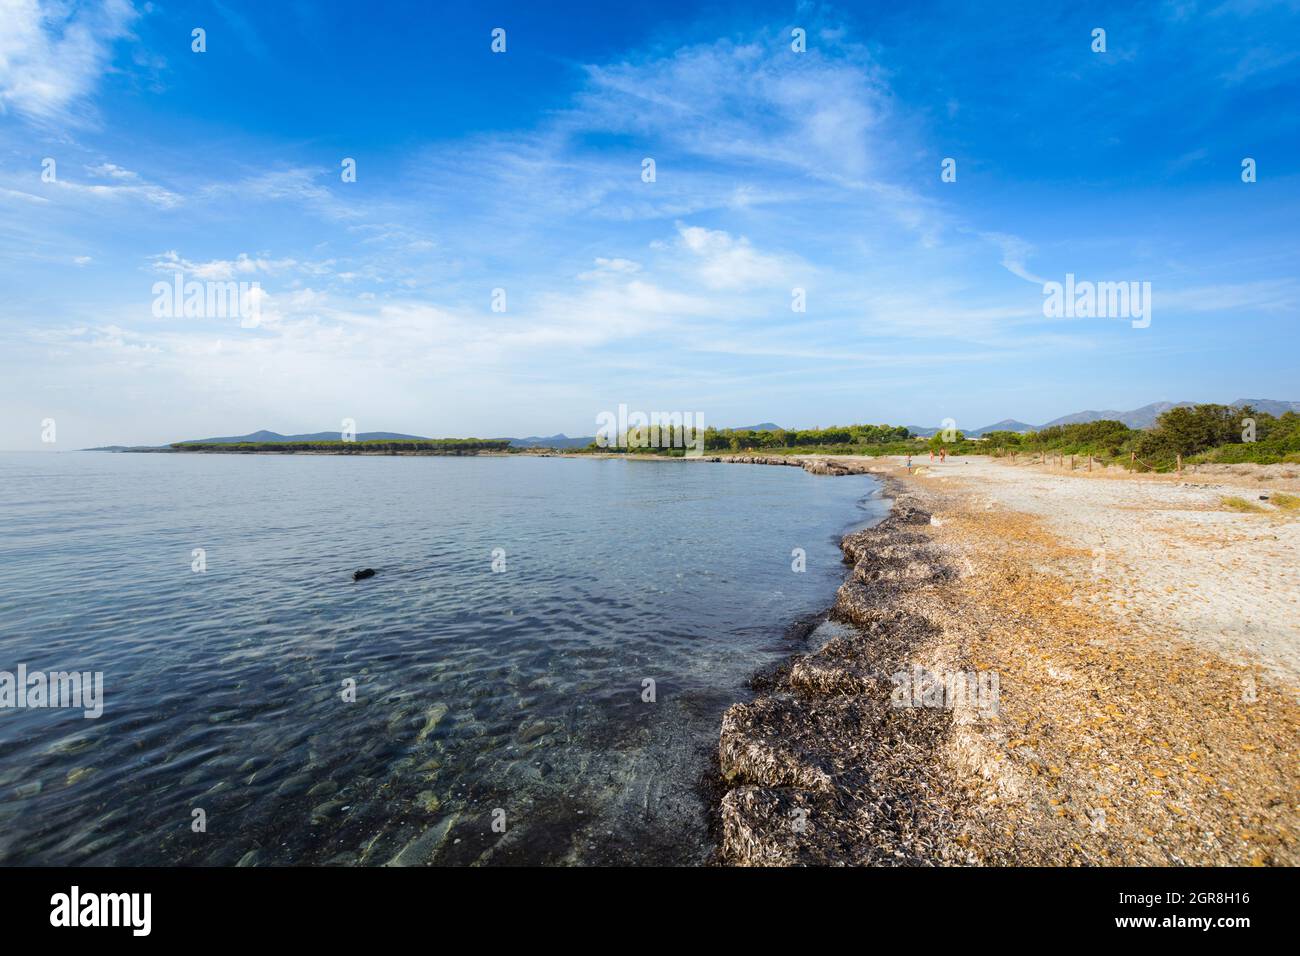 Beach and coastline of Agrustos in Sardinia Stock Photo